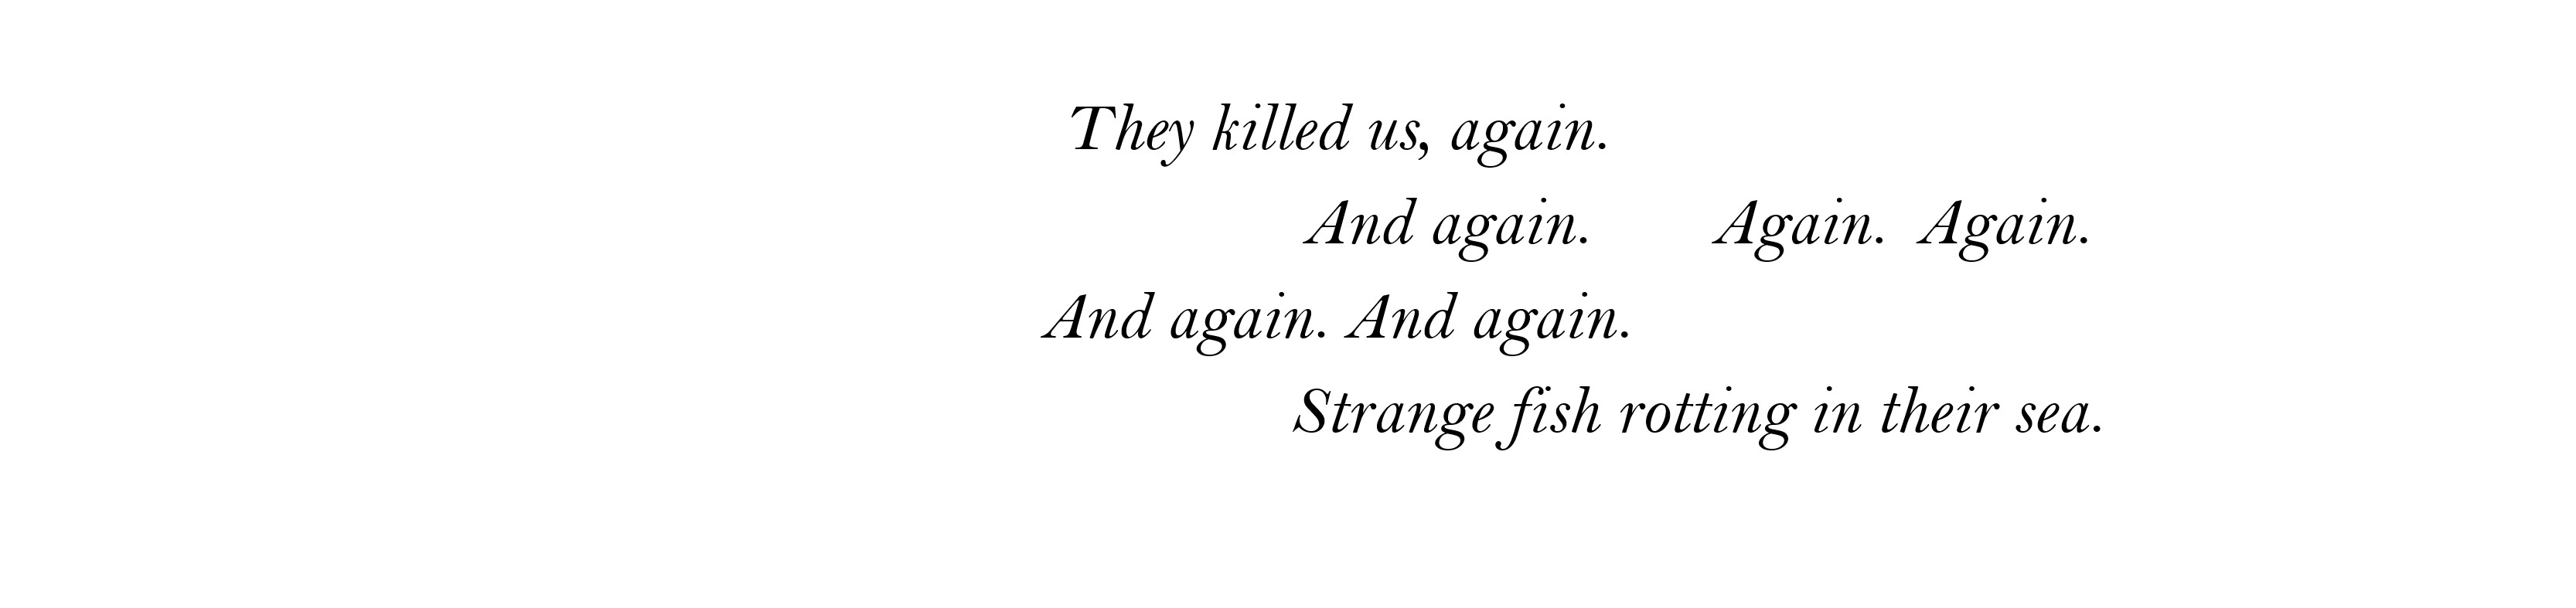 They killed us, again. And again.	Again.	Again. And again. And again. Strange fish rotting in their sea.